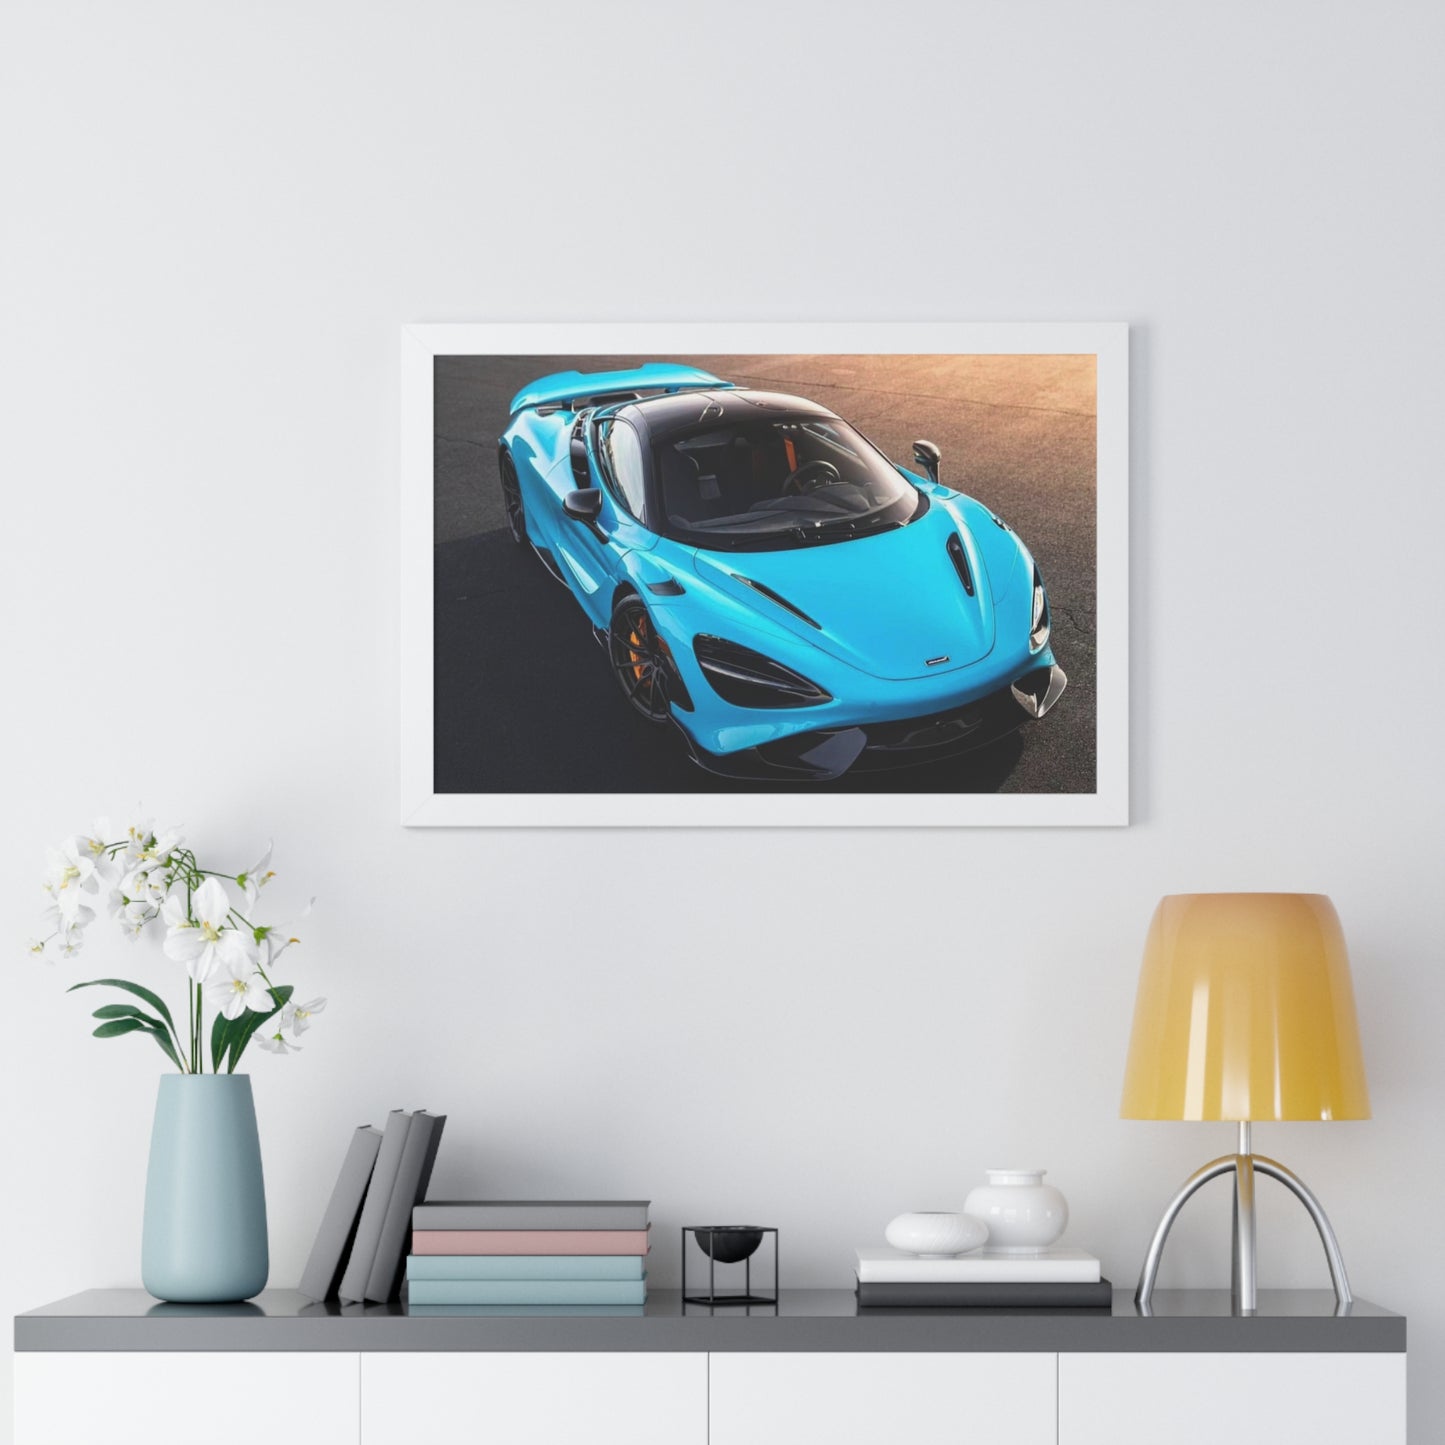 "765LT" 30" x 20" Framed McLaren Poster